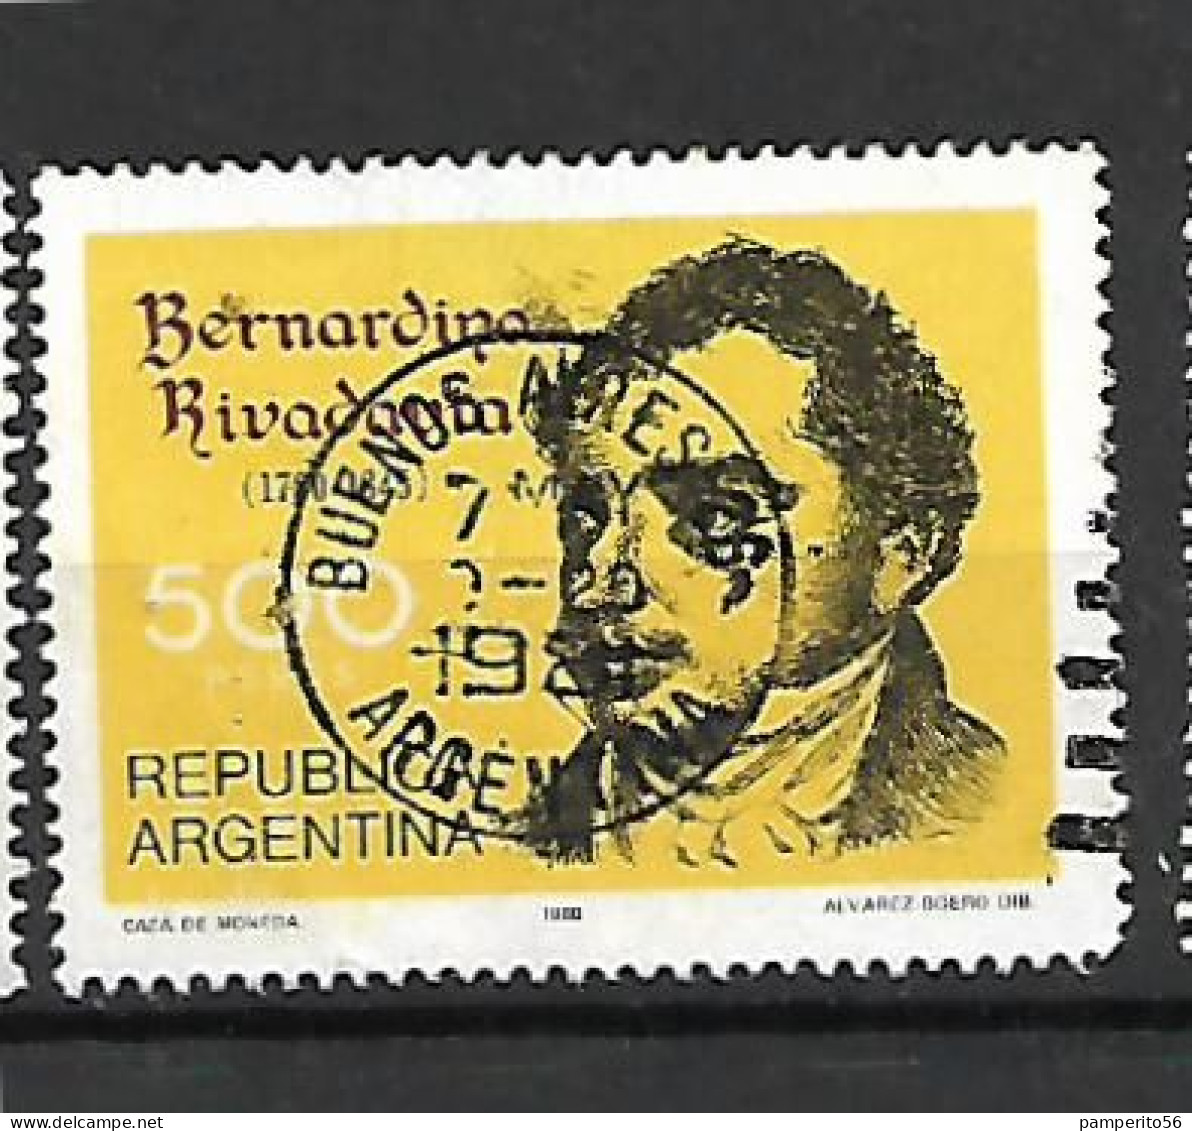 ARGENTINA - AÑO 1980 -  Personajes - Bernardino Rivadavia - Usado - Used Stamps